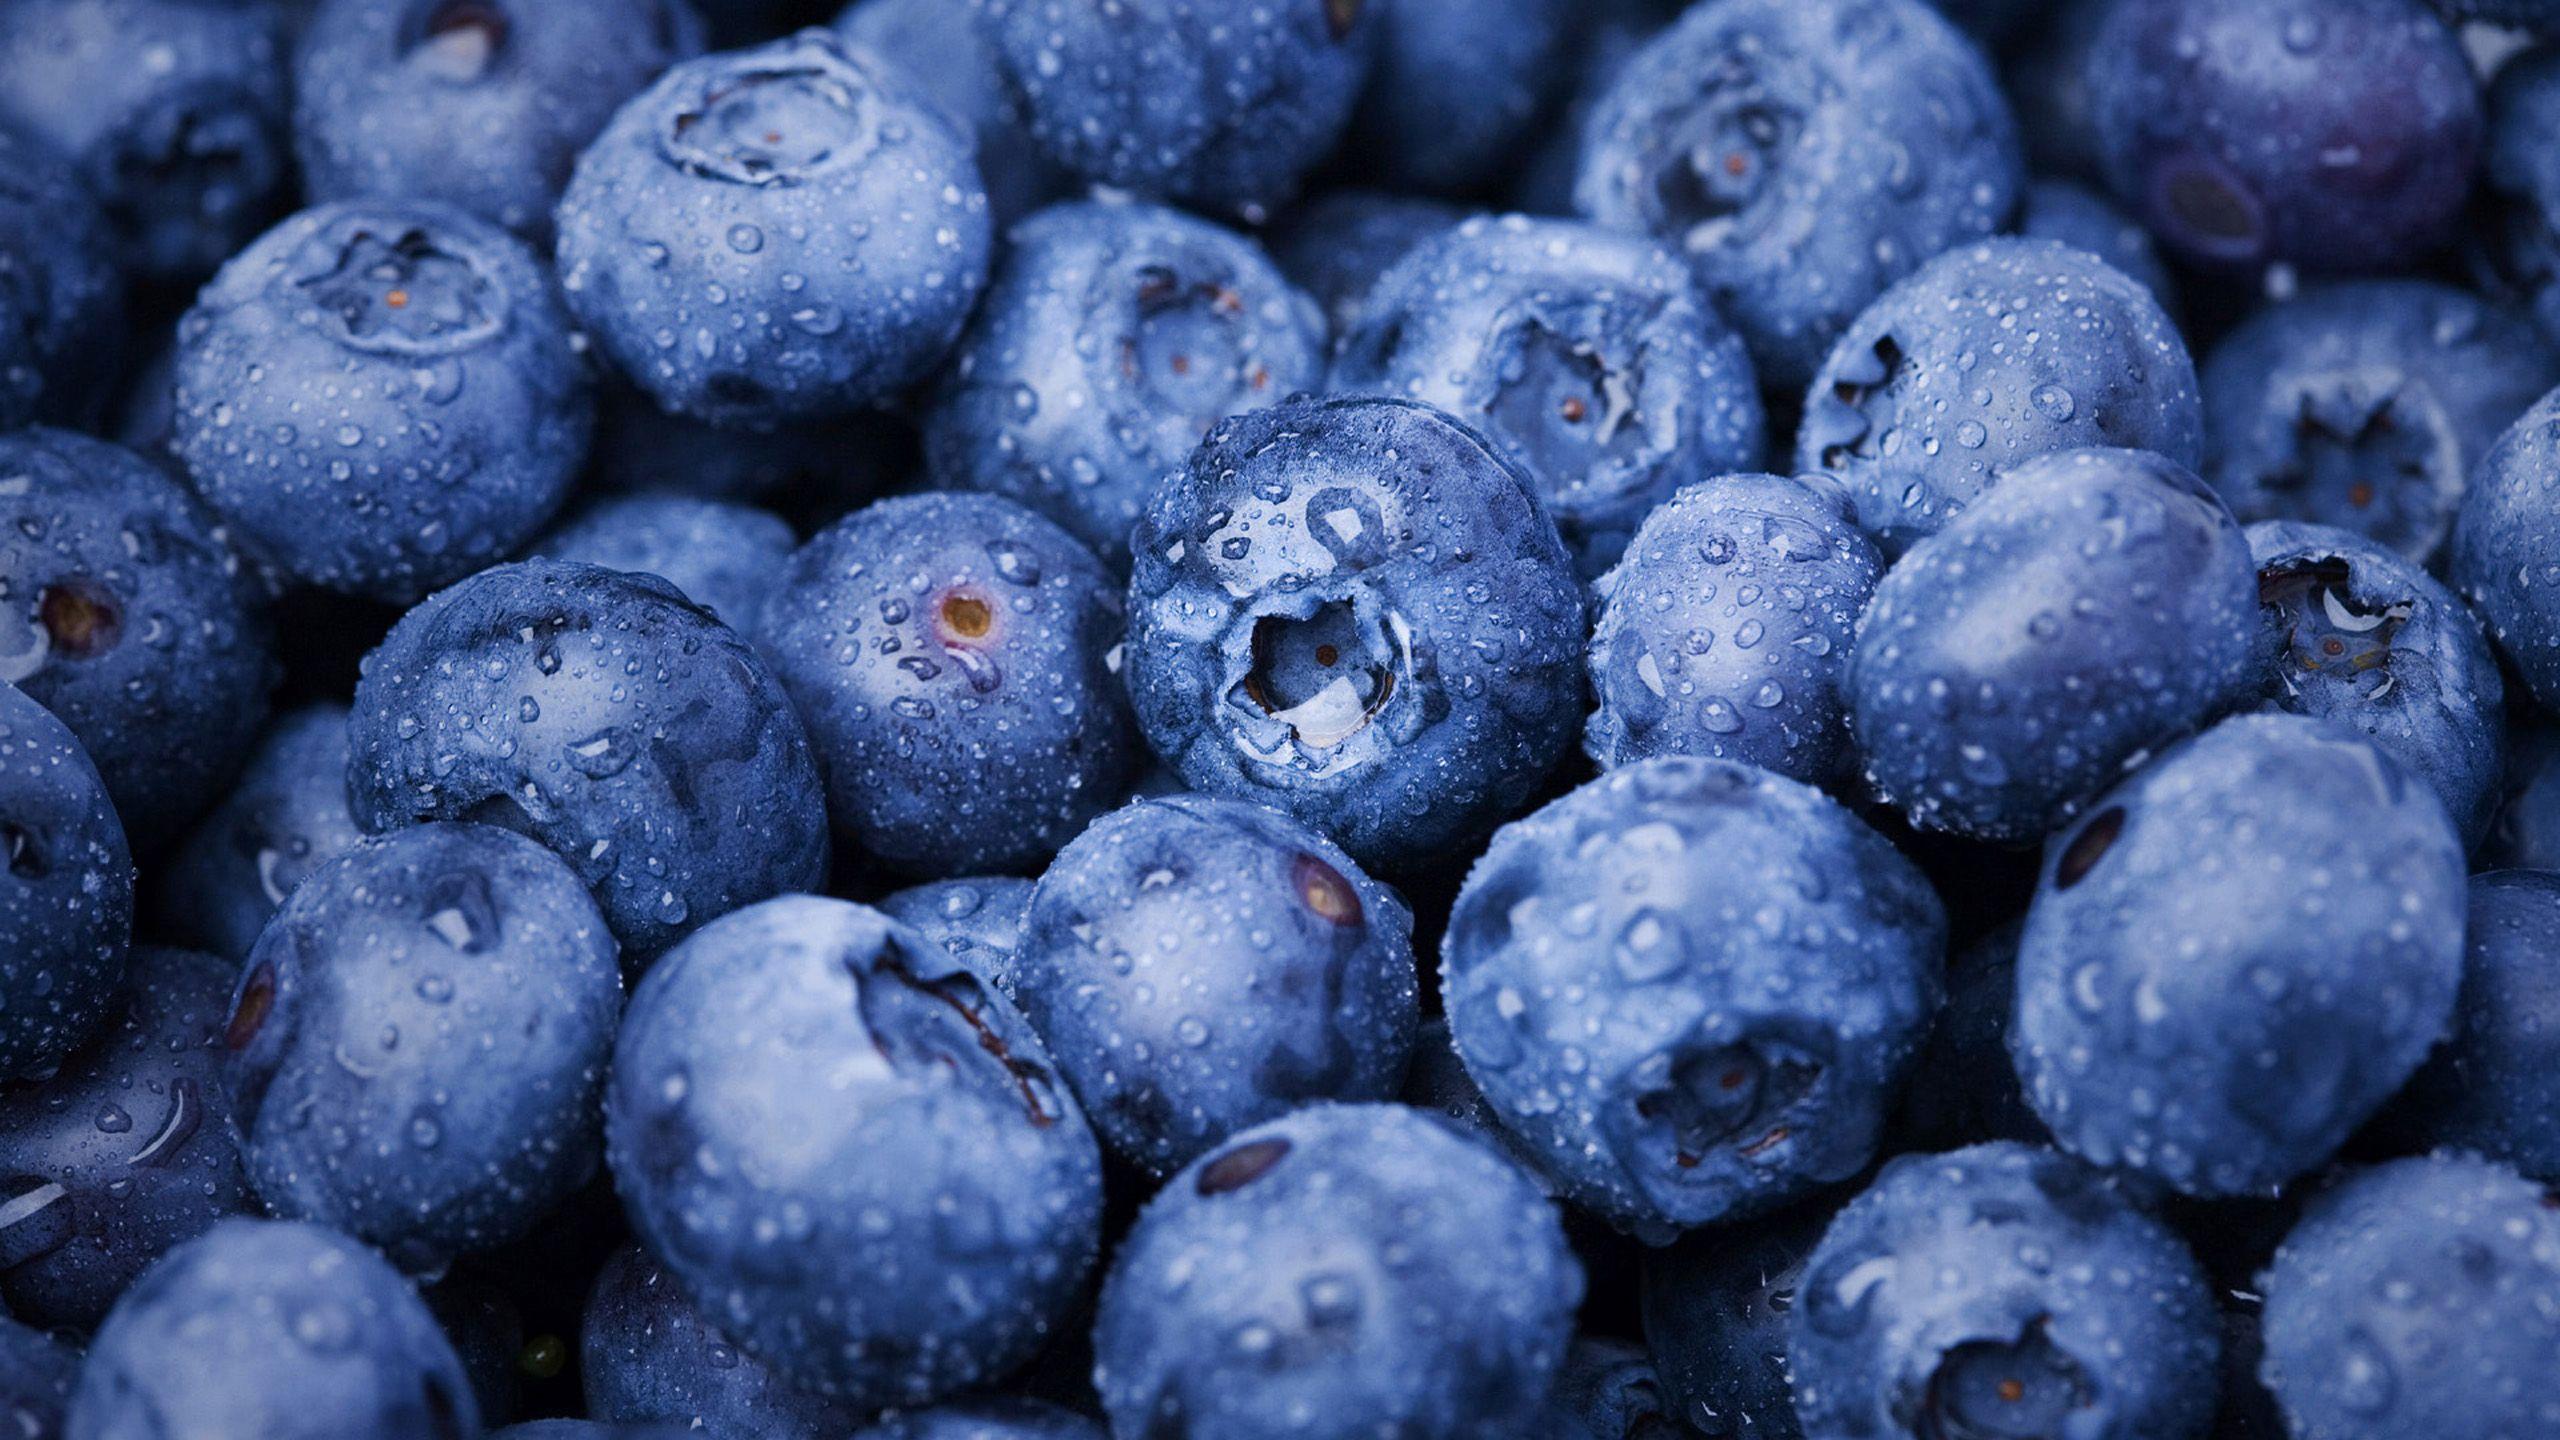 Download wallpaper 1125x2436 fresh blueberries darkblue fruit iphone  x 1125x2436 hd background 21796